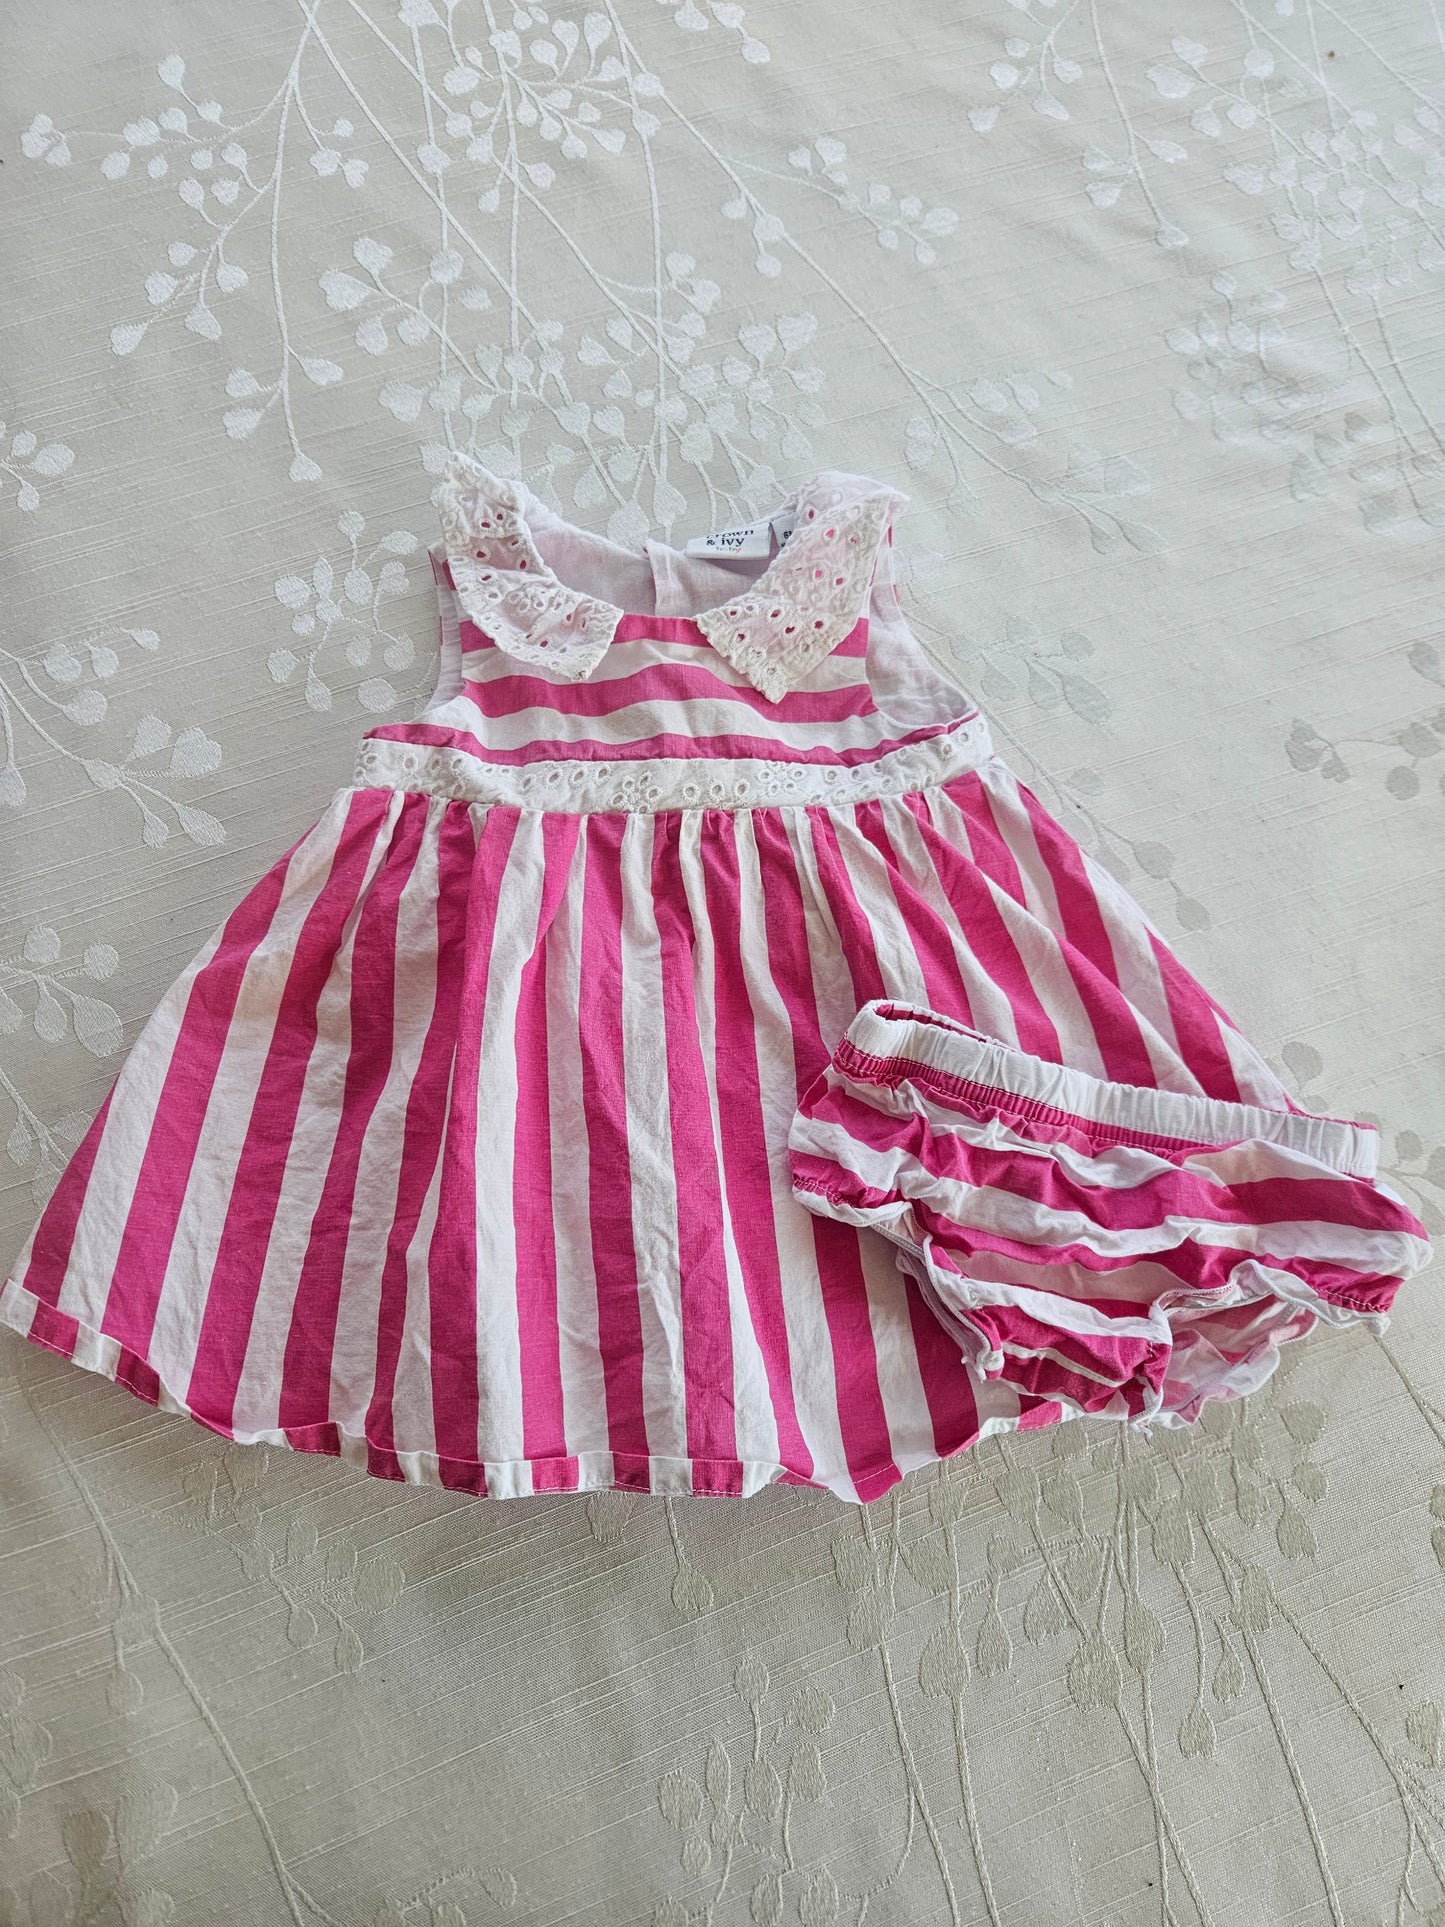 Crown & Ivy Pink Striped Dress - 6 months